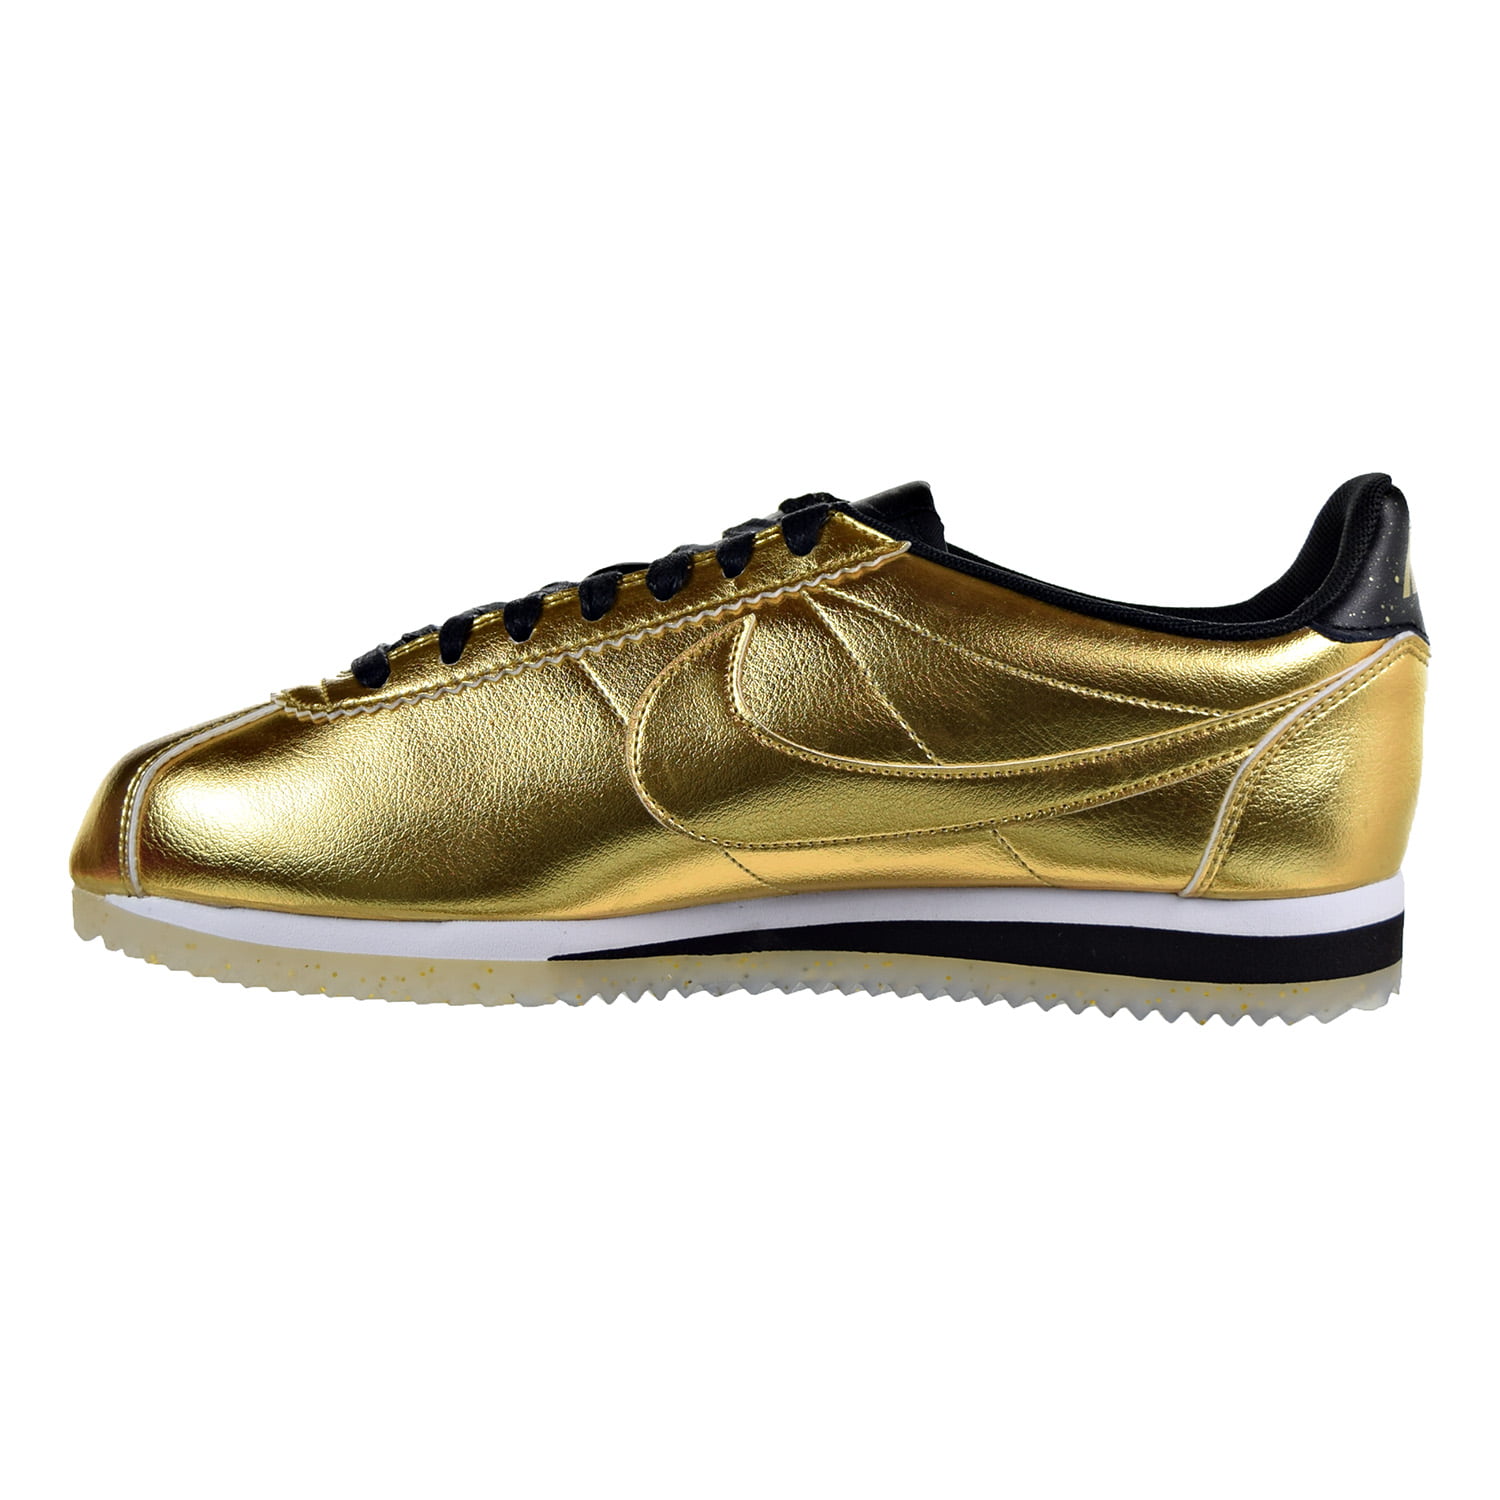 Nike Cortez Leather Black/Metallic Gold Under Retail — Sneaker Shouts